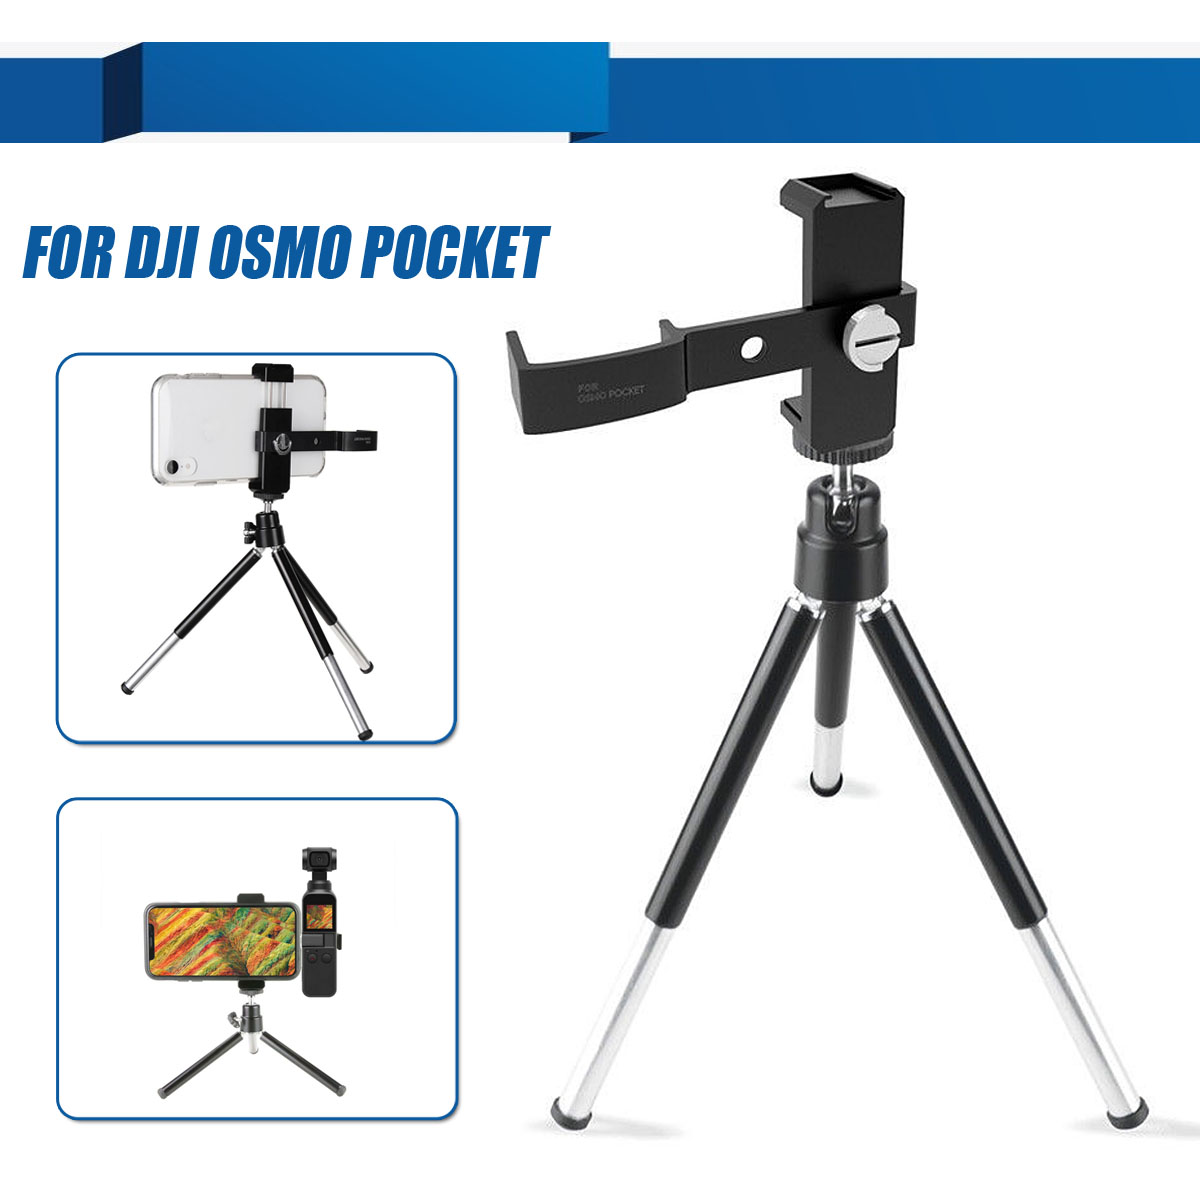 DJI-Osmo-Pocket-Multi-Functional-Extension-Tripod-Bracket-Mount-Phone-Holder-Handheld-Gimbal-1409310